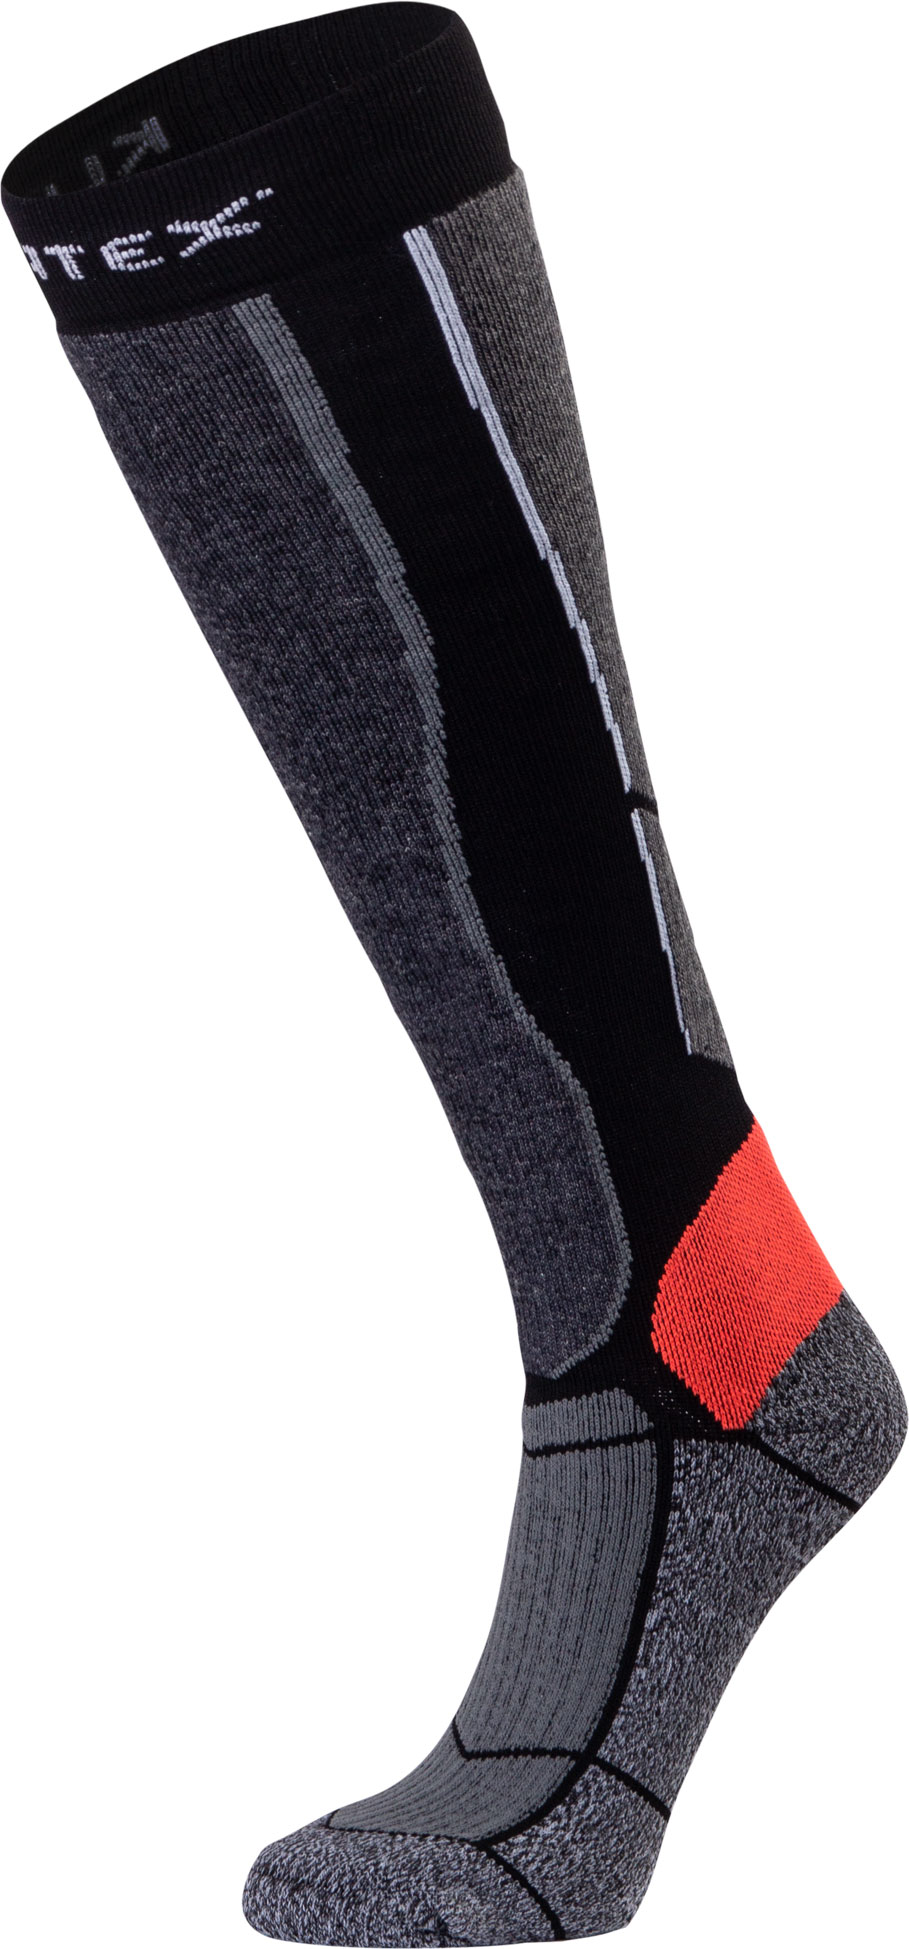 Functional ski socks